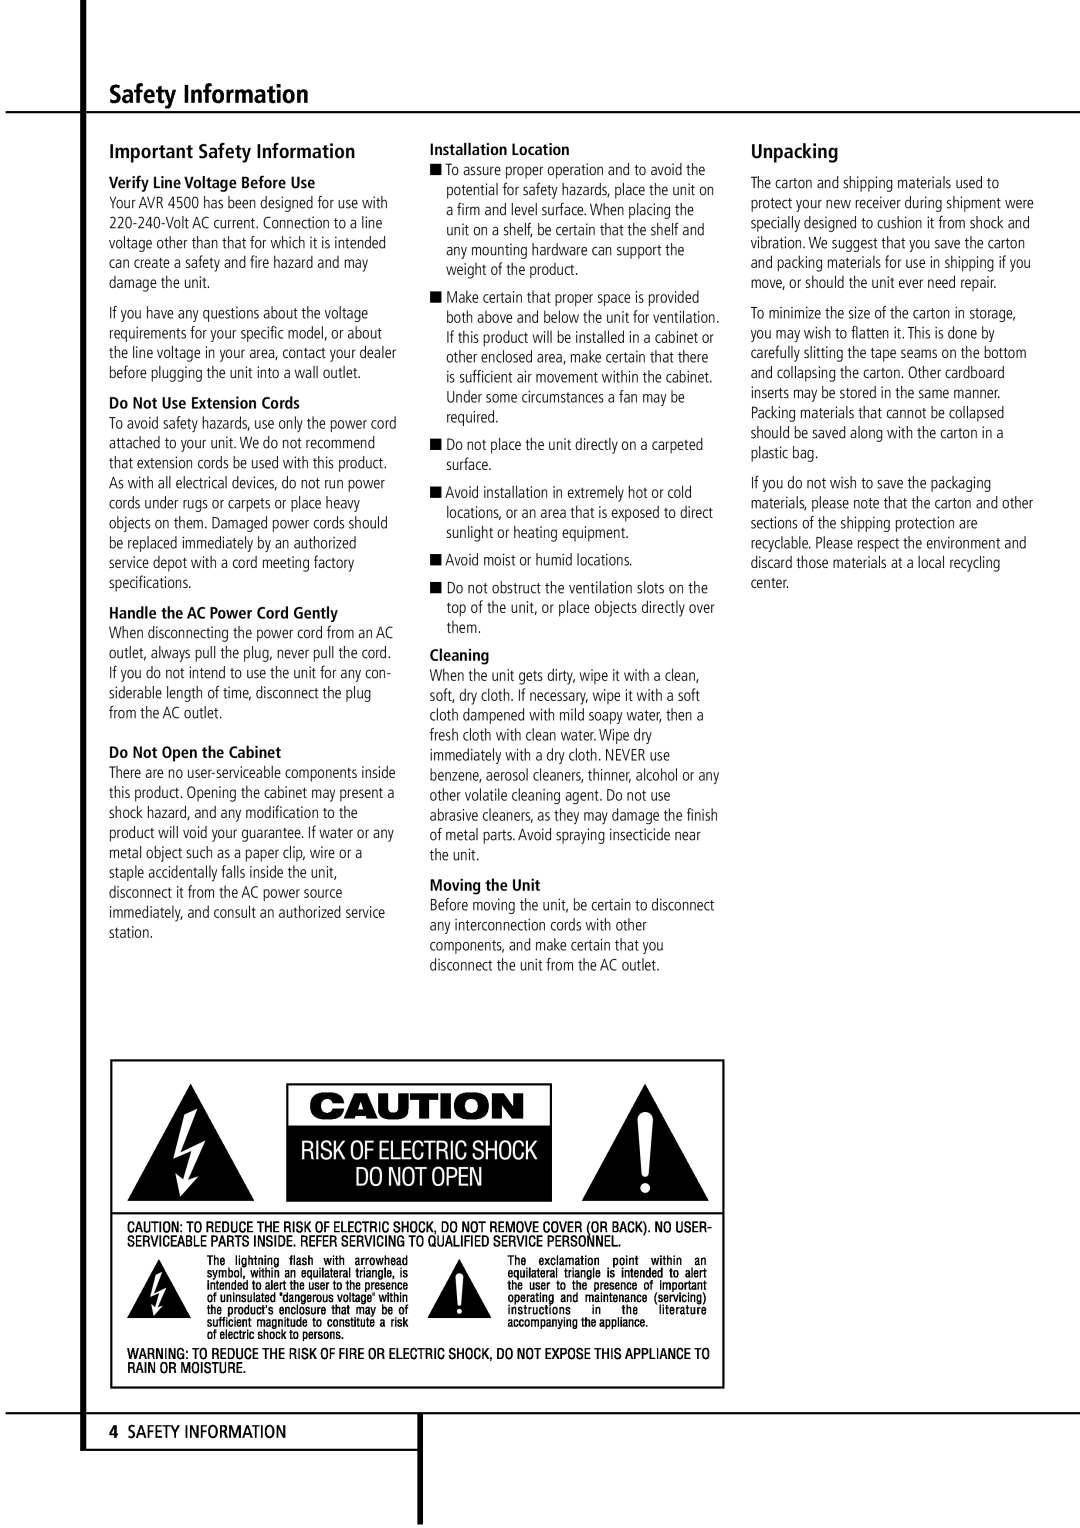 Harman-Kardon AVR4500 Important Safety Information, Unpacking, 4SAFETY INFORMATION, Verify Line Voltage Before Use 